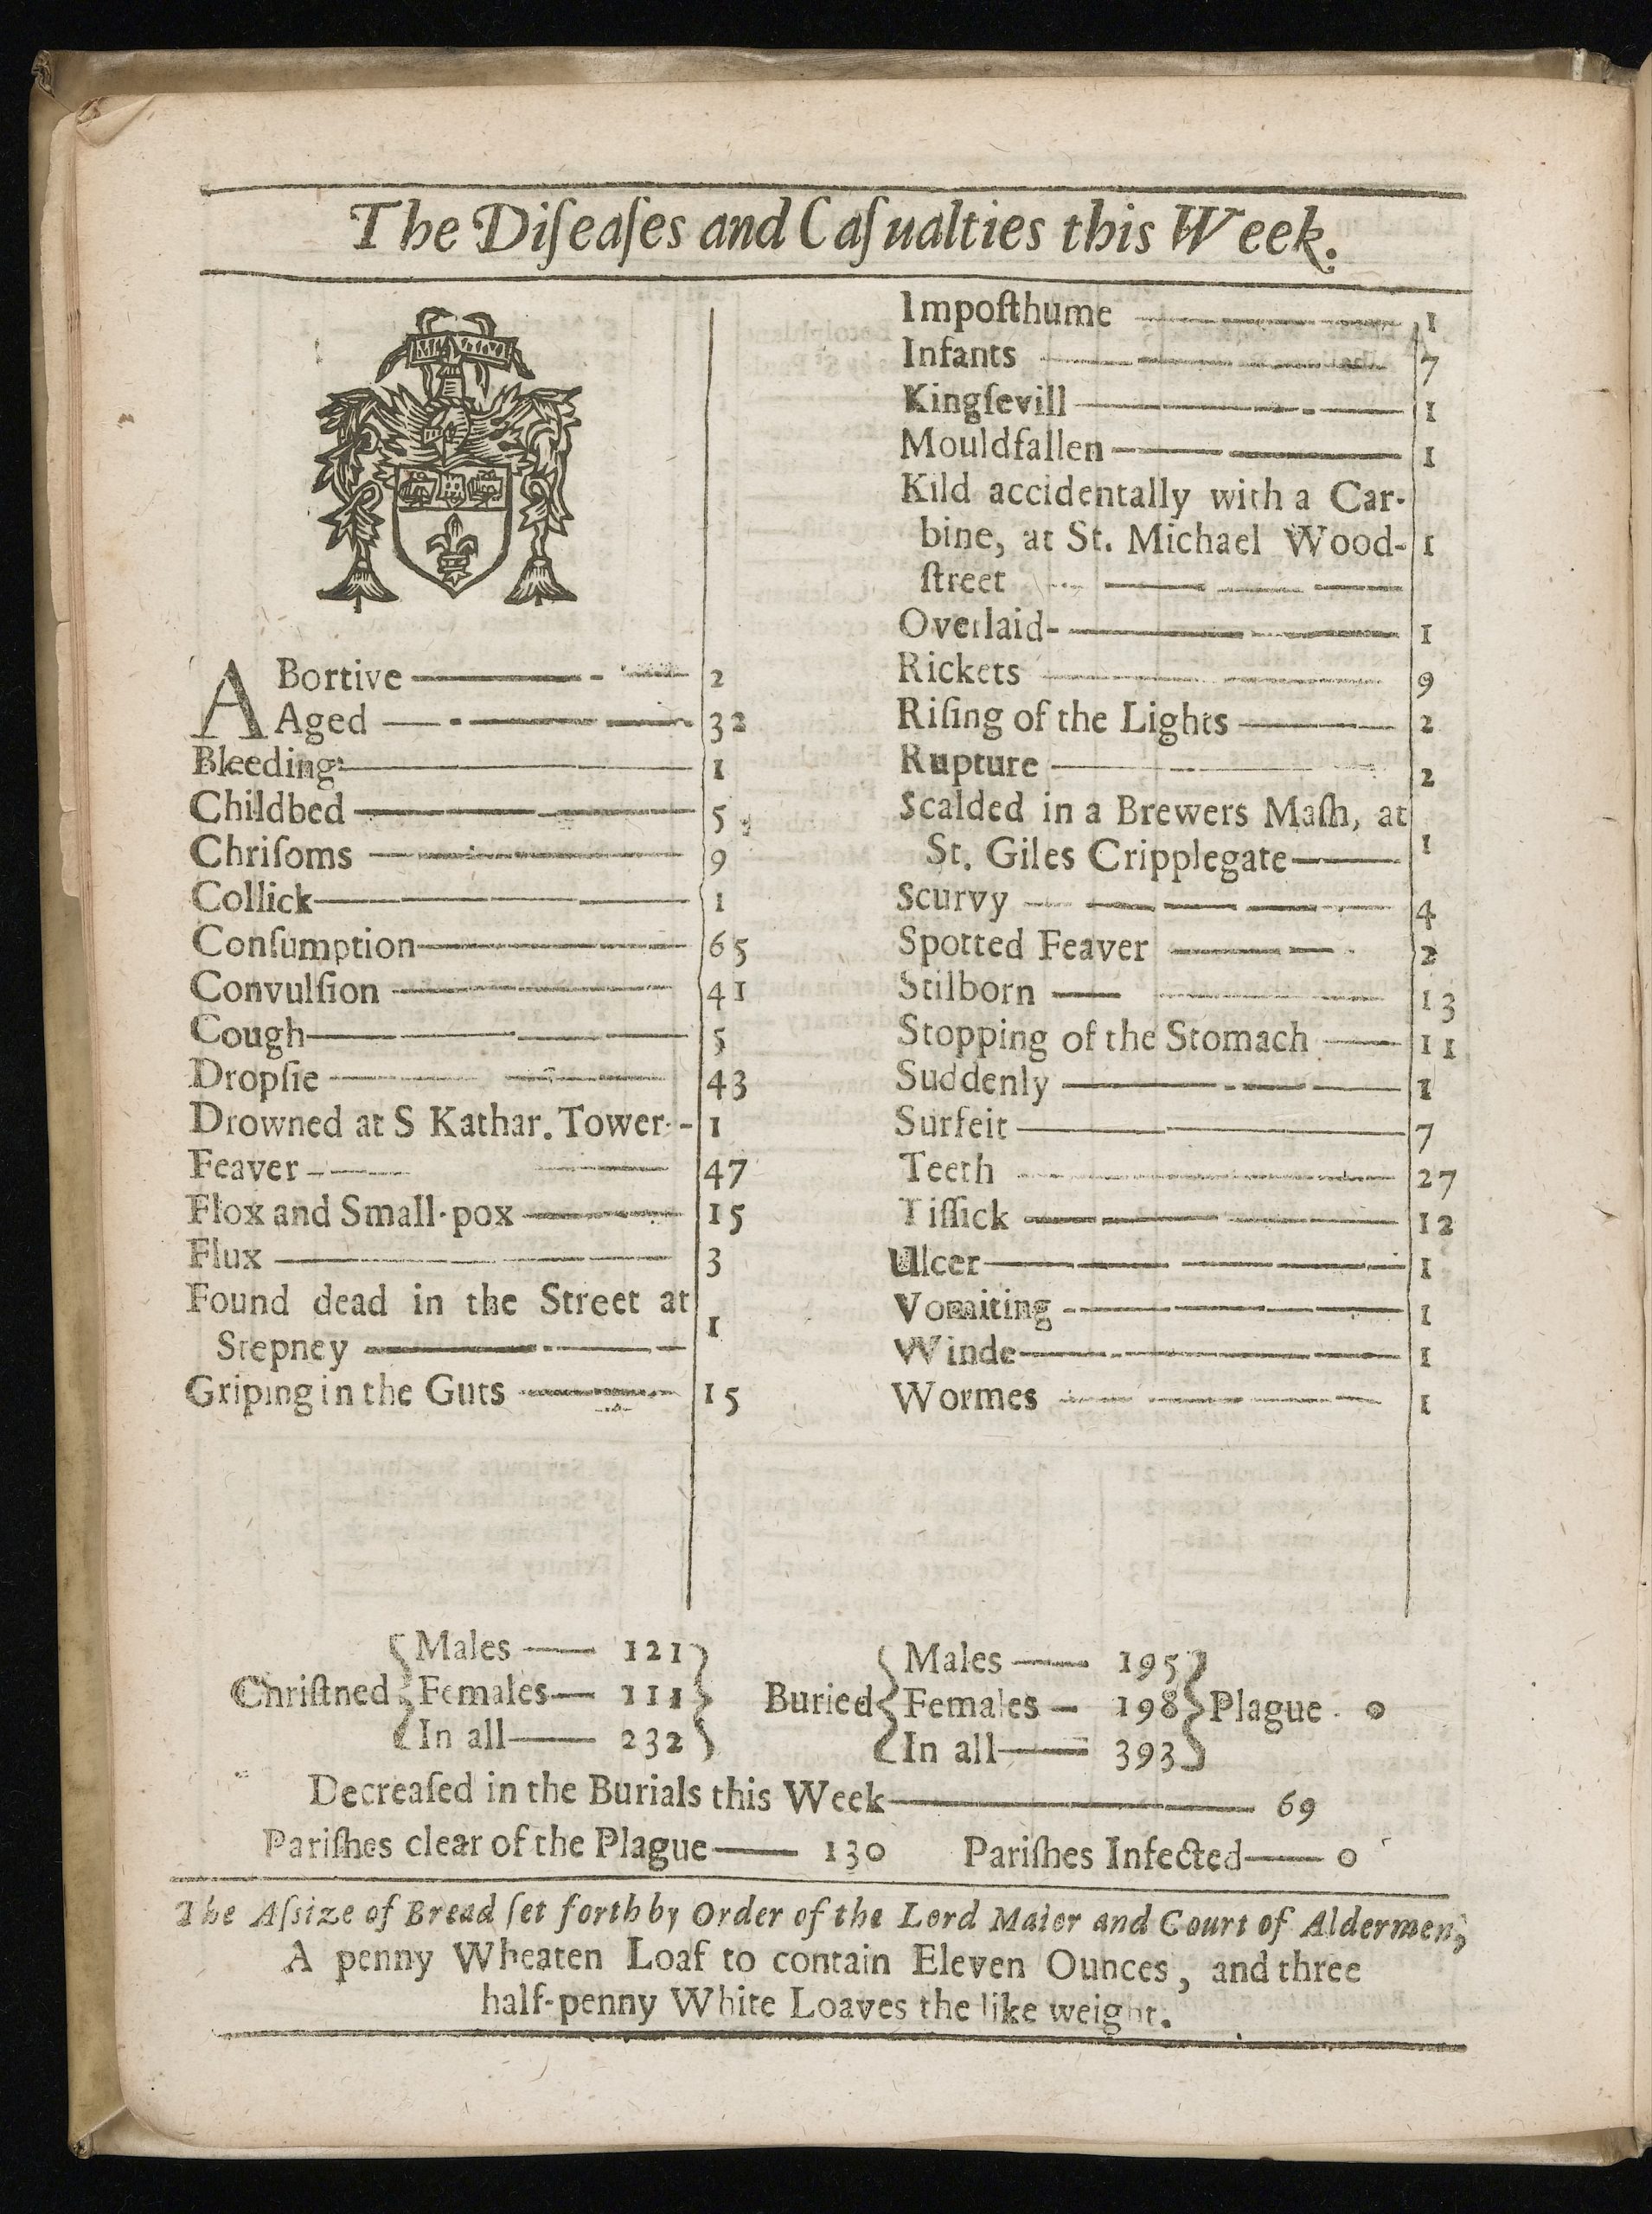 Bills of Mortality form February 21 -28, 1664. A plague-free week.